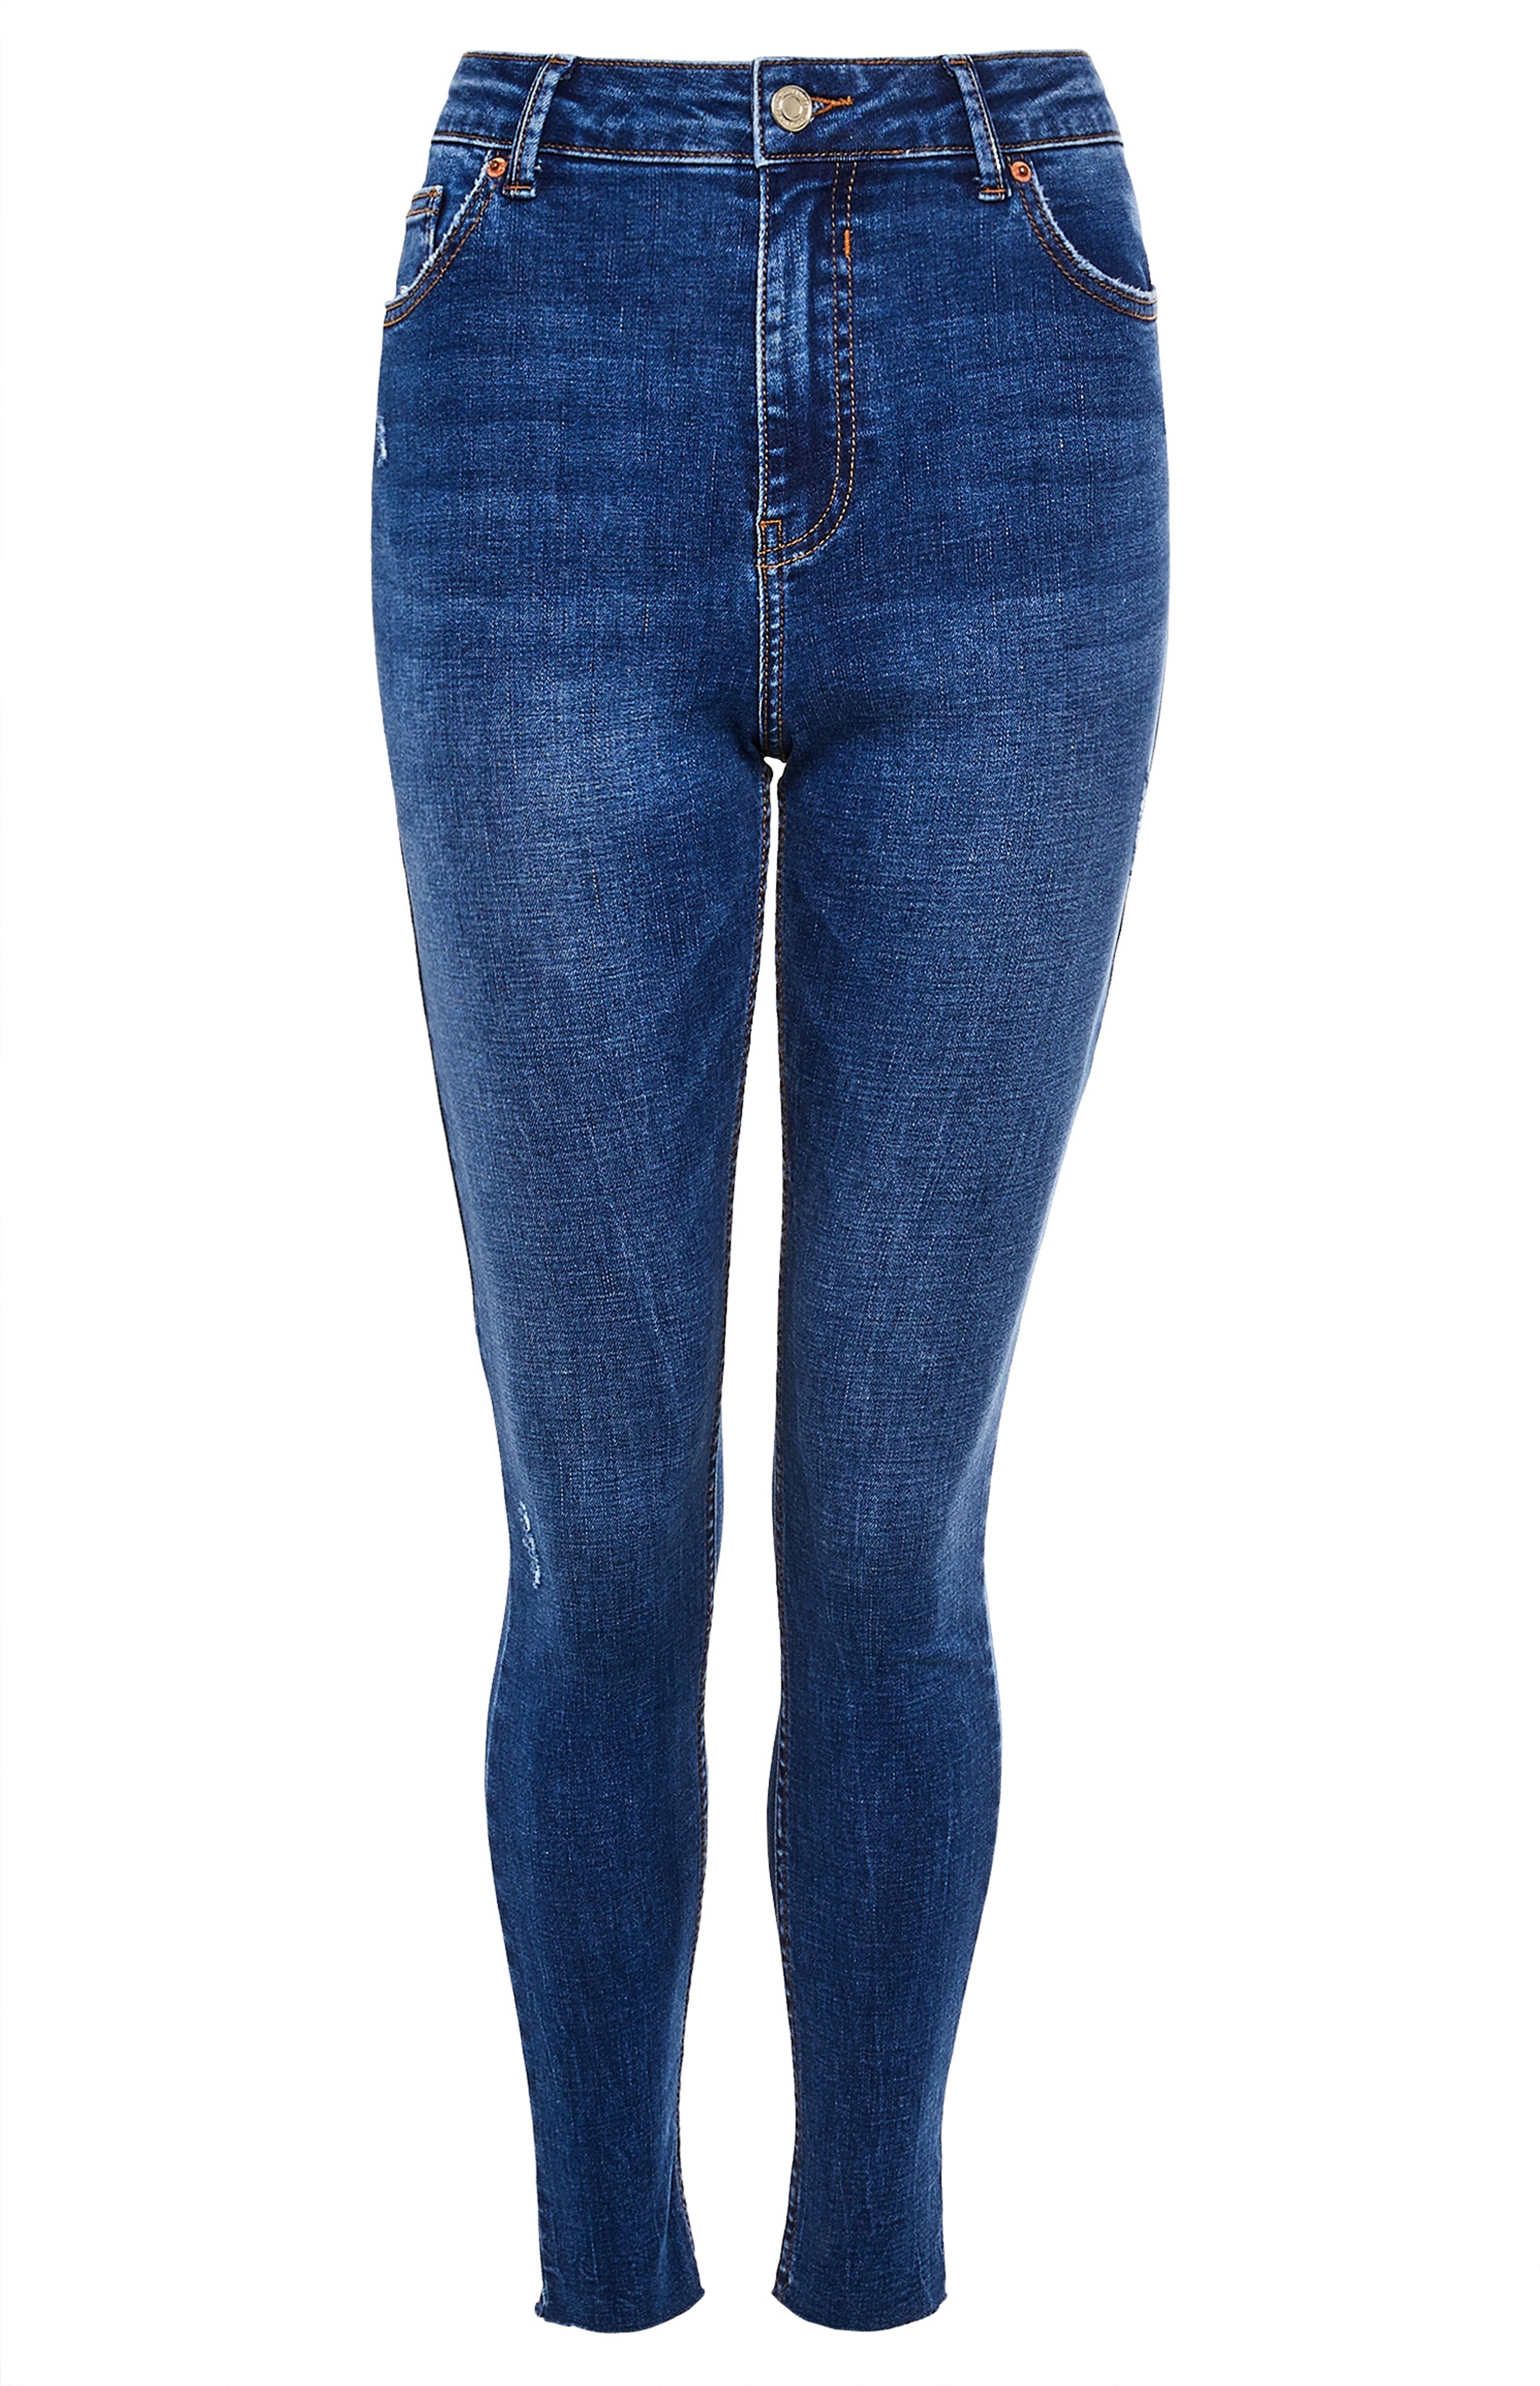 primark super high waisted skinny jeans